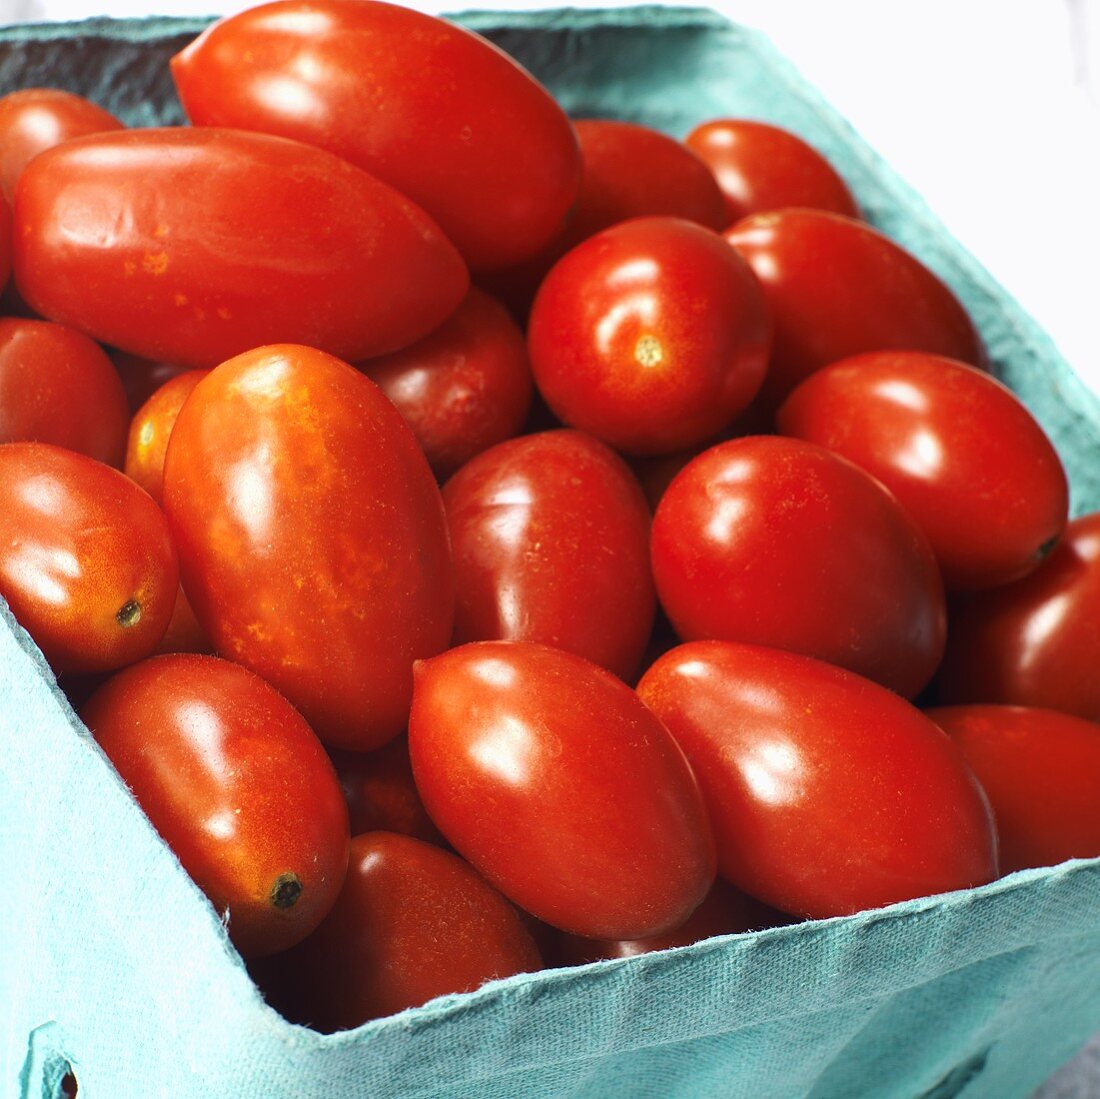 Carton of Juliet Tomatoes